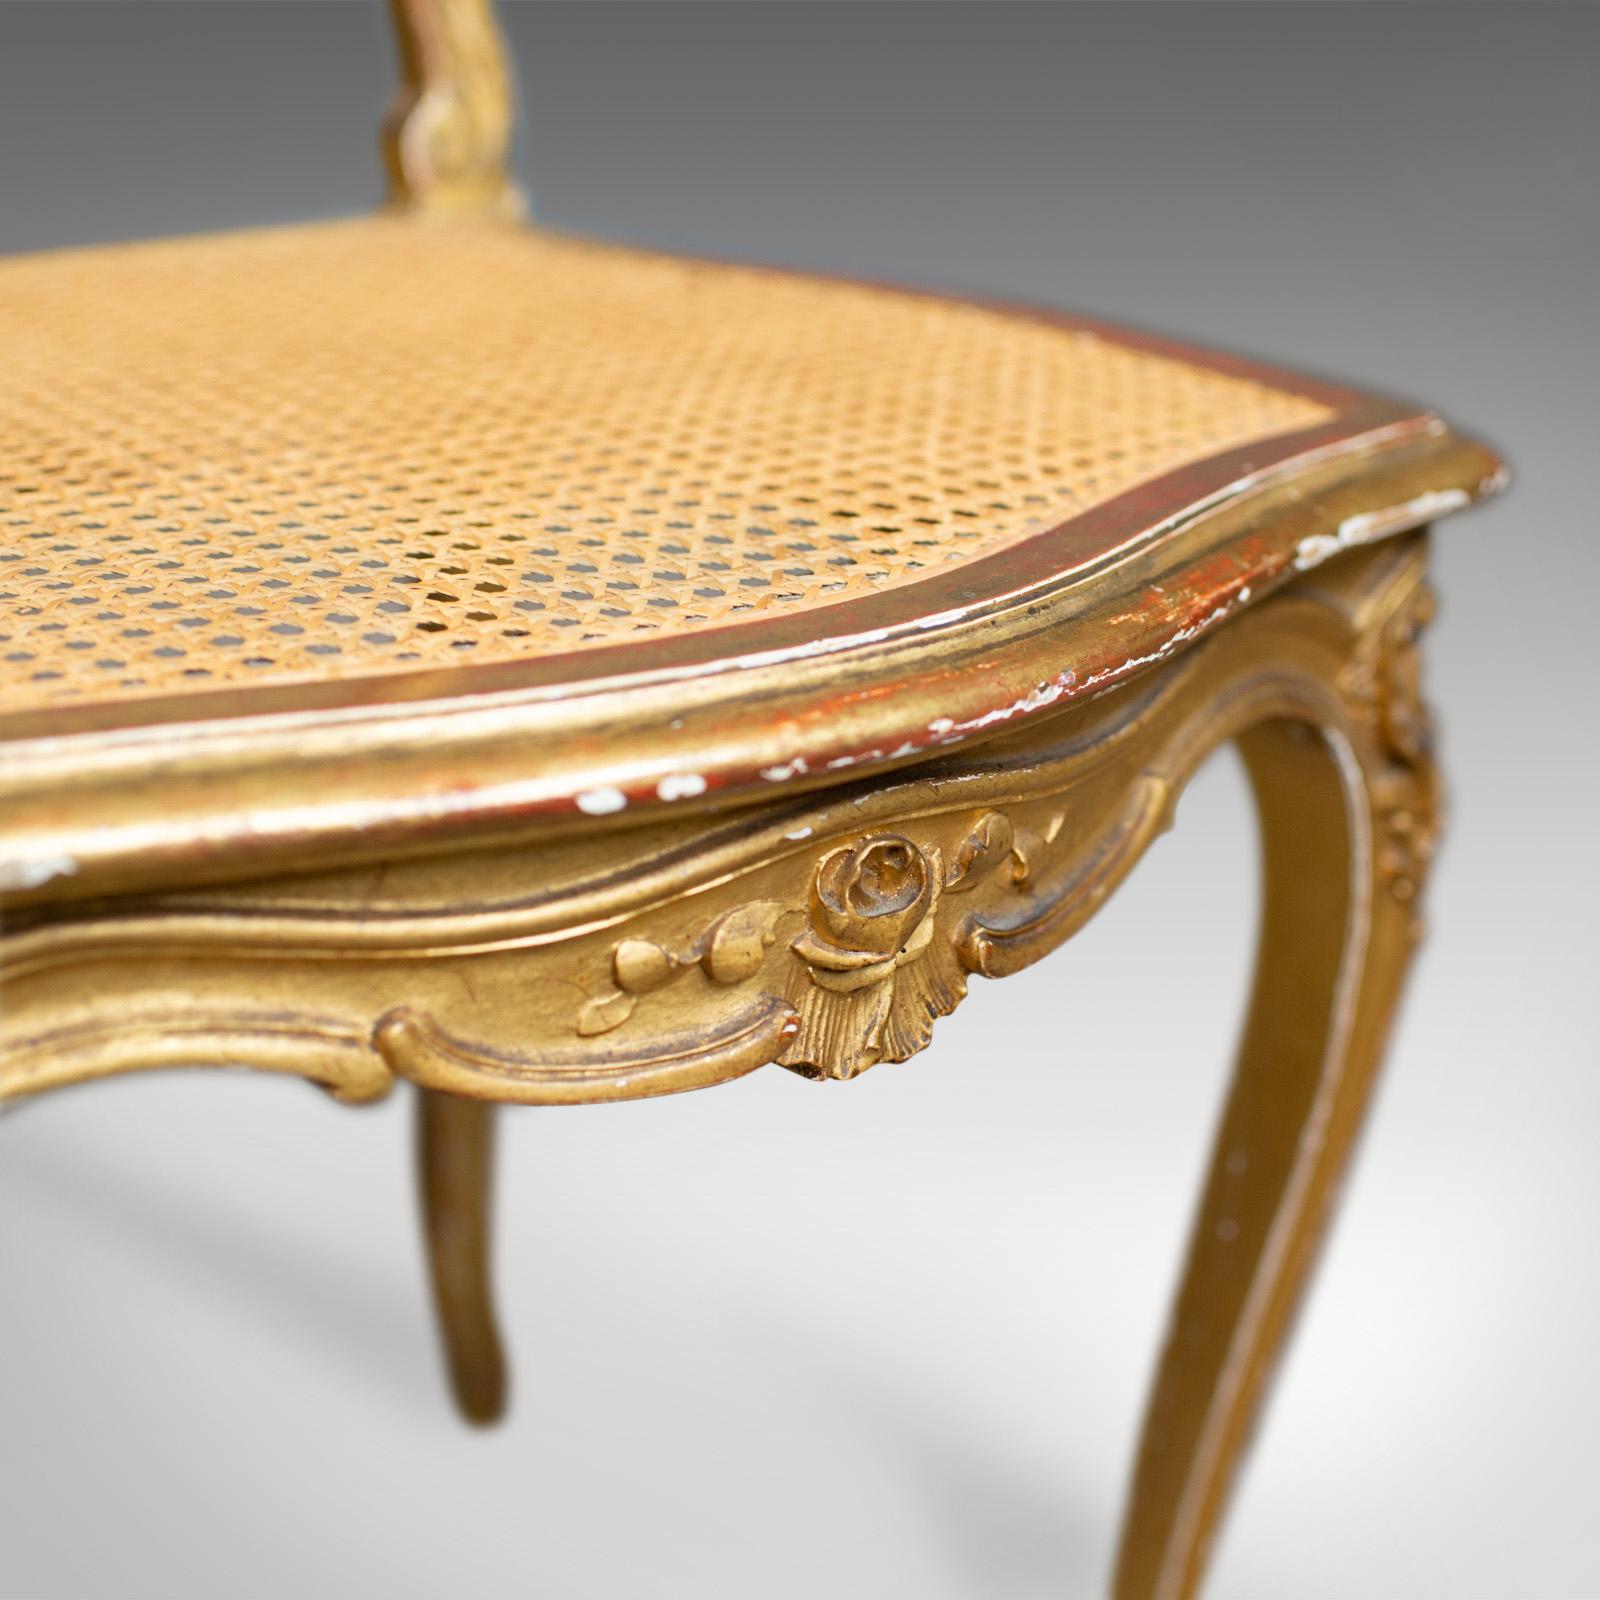 Antique Louis XV Revival Salon Chairs, French, Giltwood, Cane, circa 1900 3